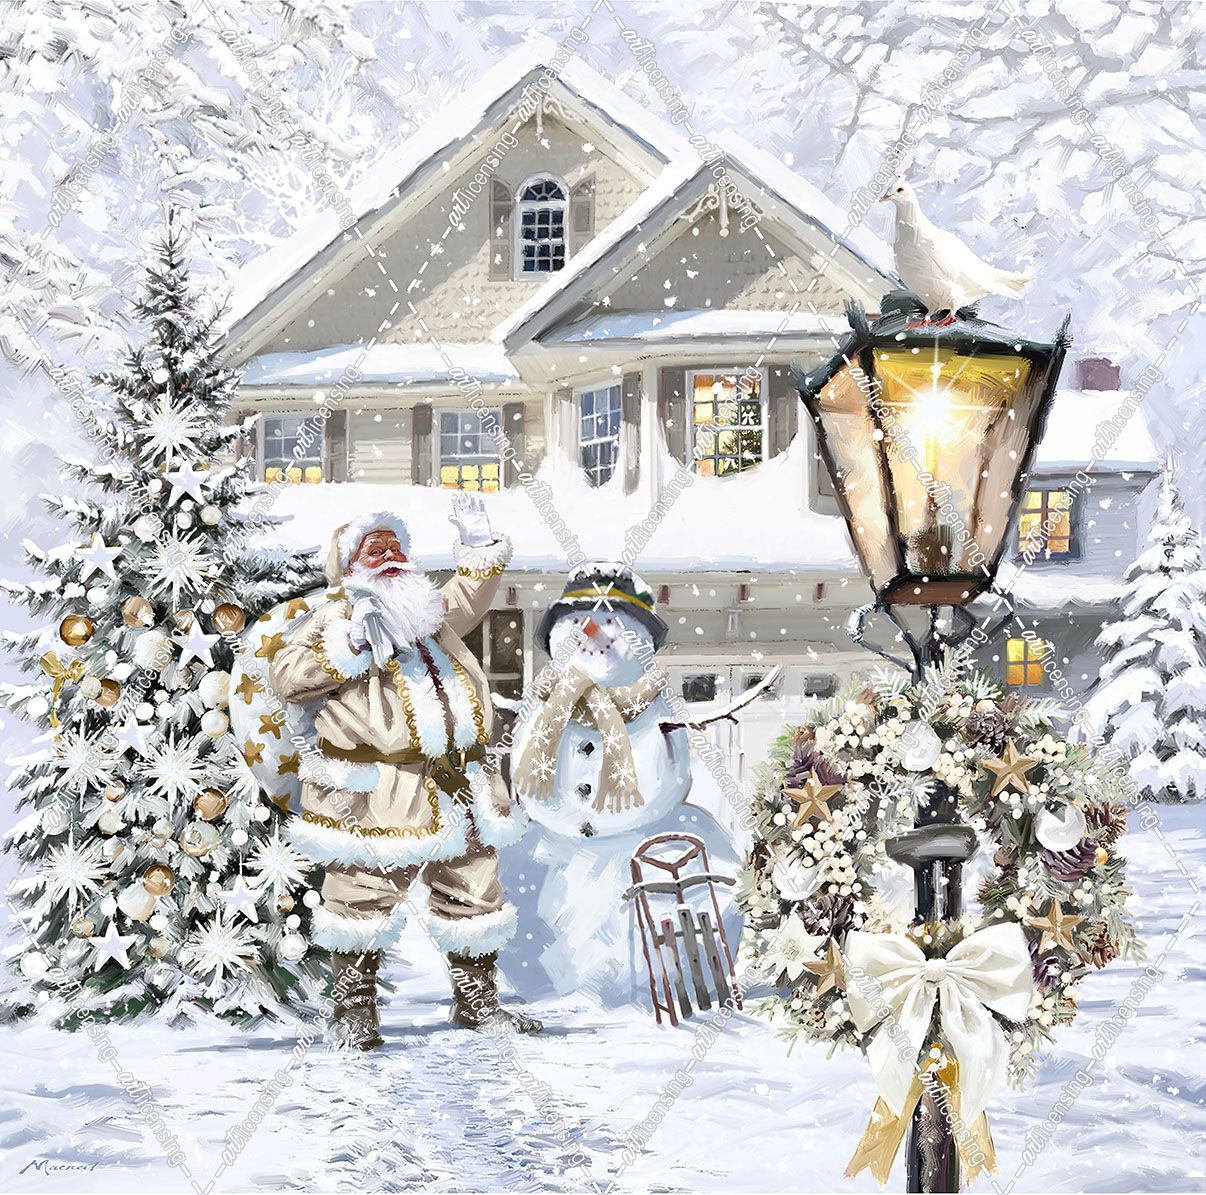 2148-2 White Christmas House and Santa